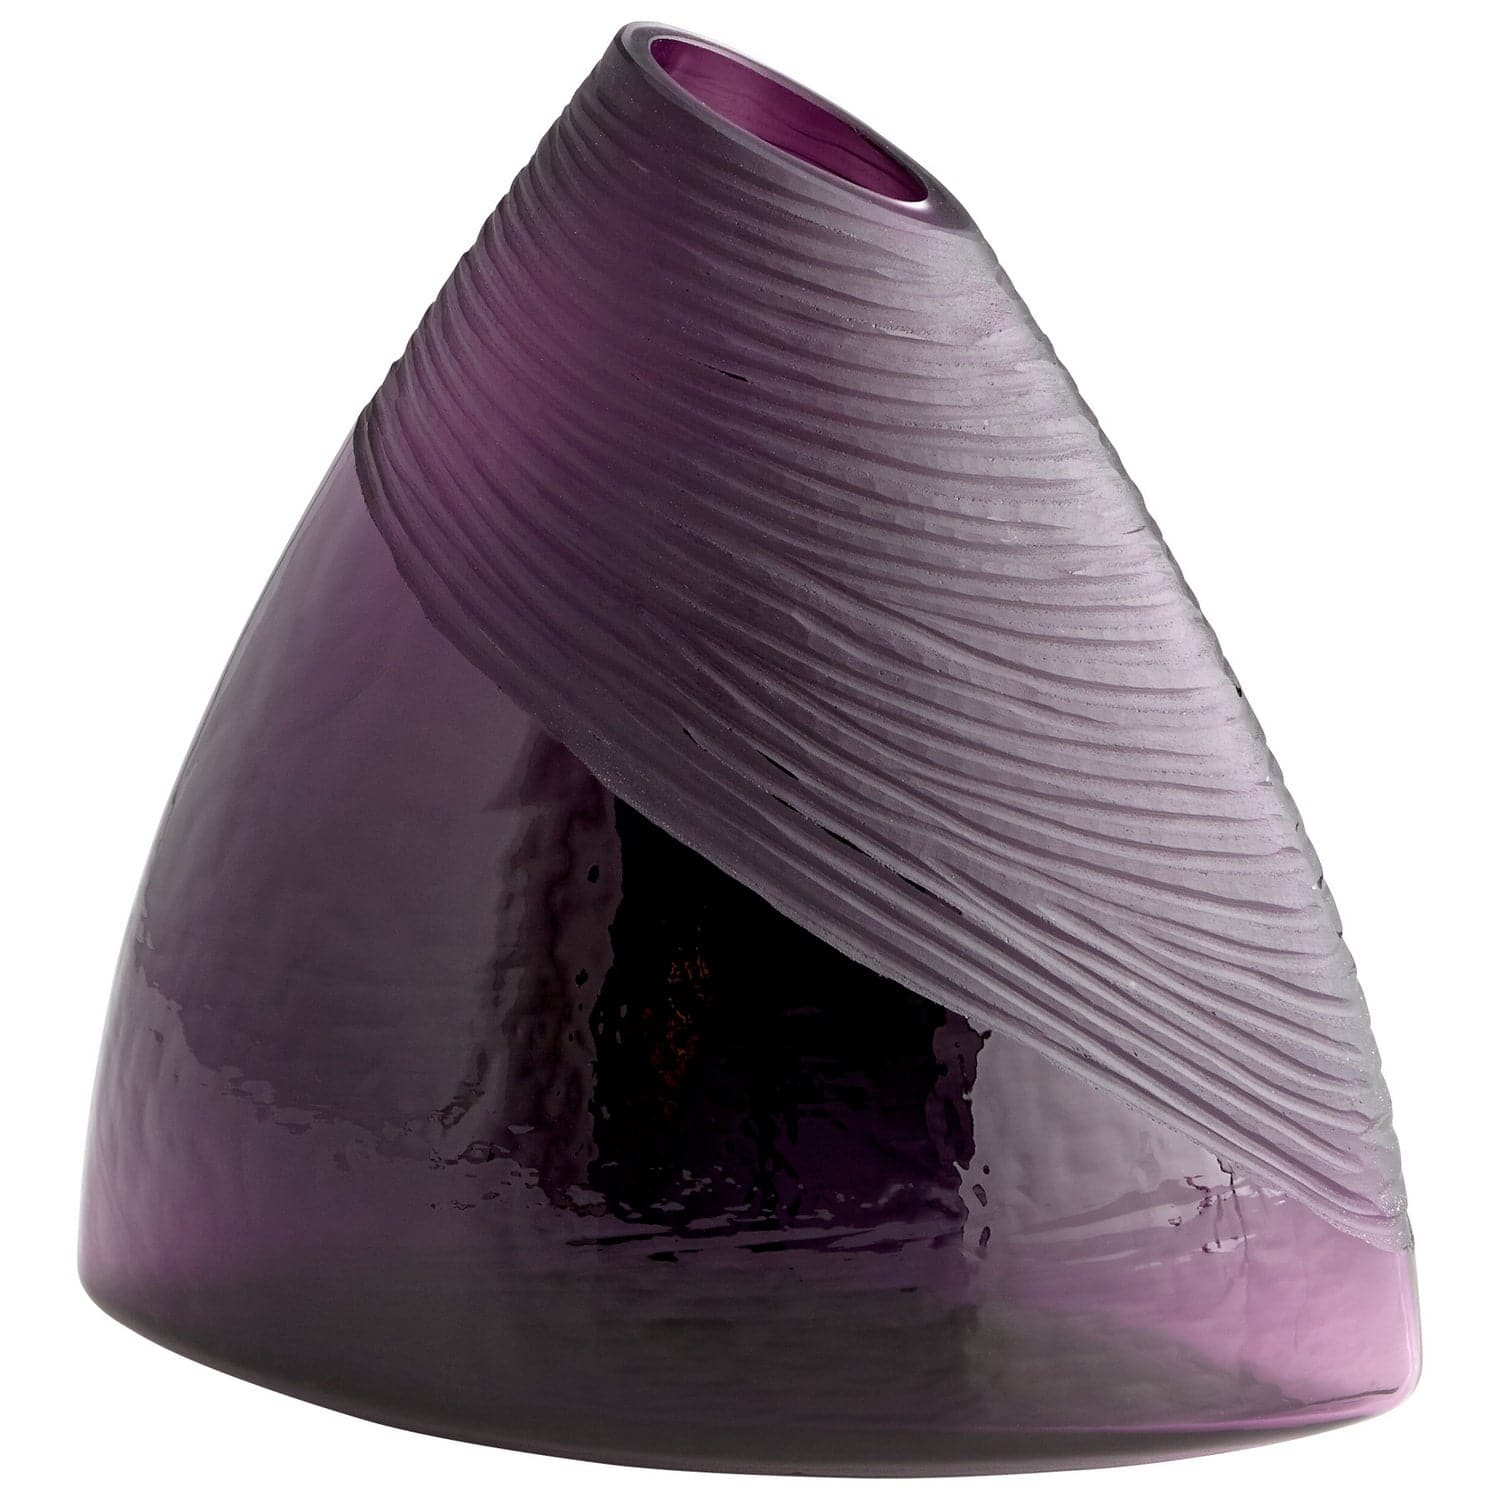 Cyan - 07336 - Vase - Mount - Purple